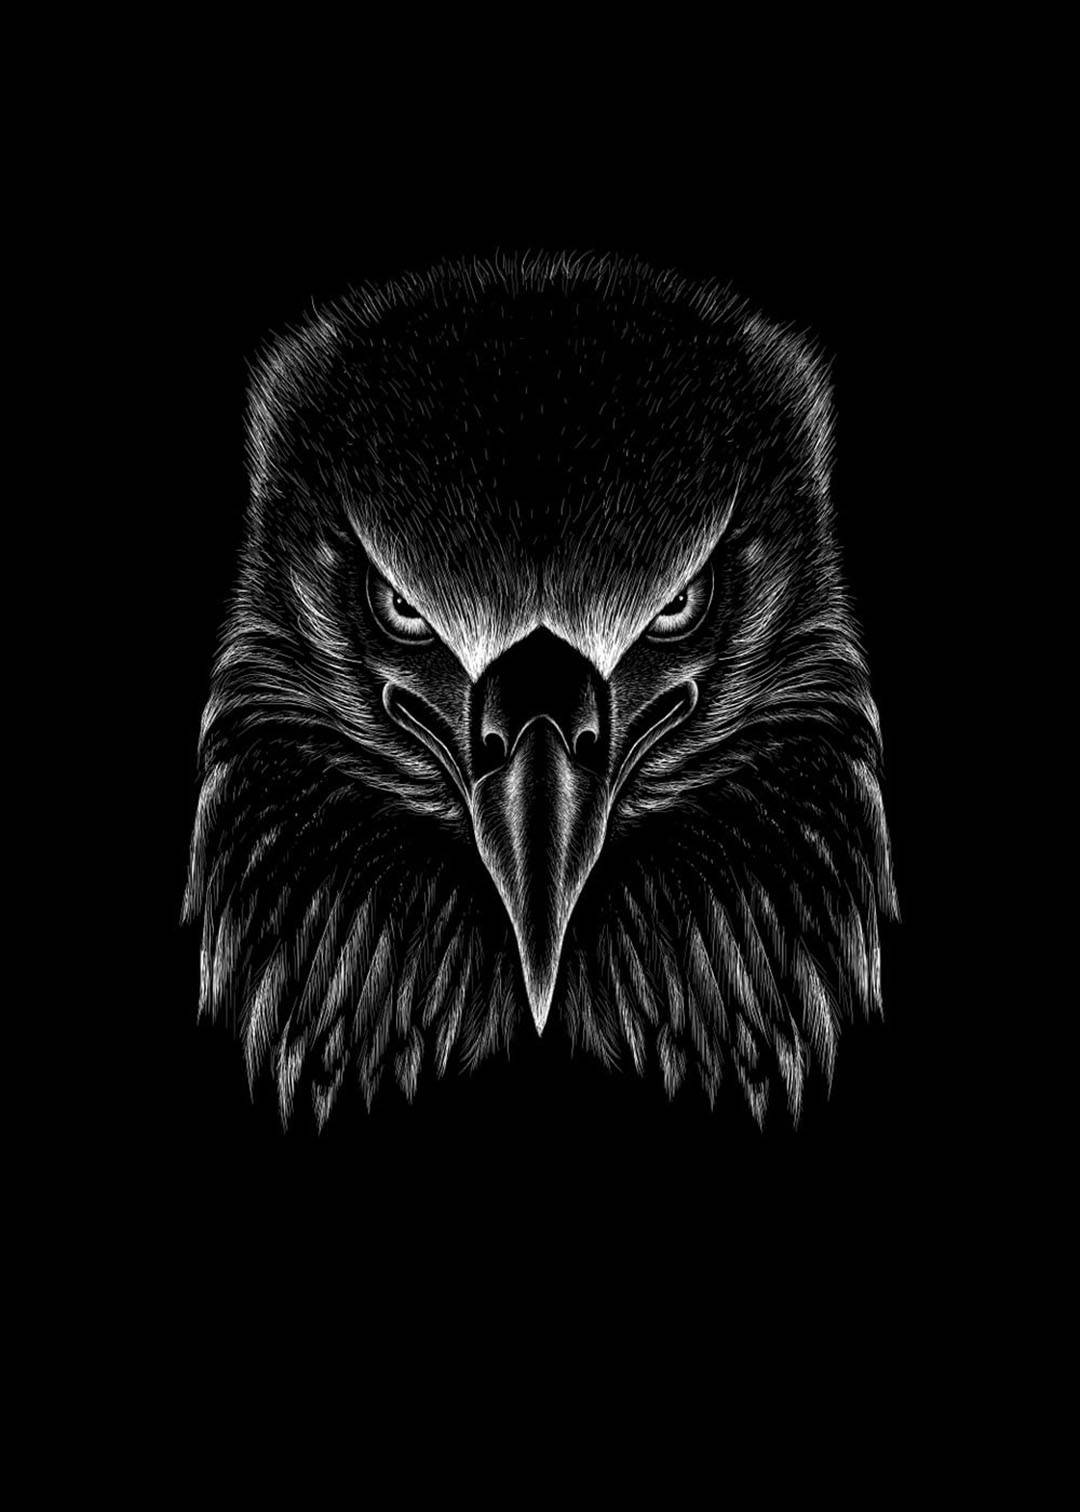 Dark Android Fierce Eagle Eyes